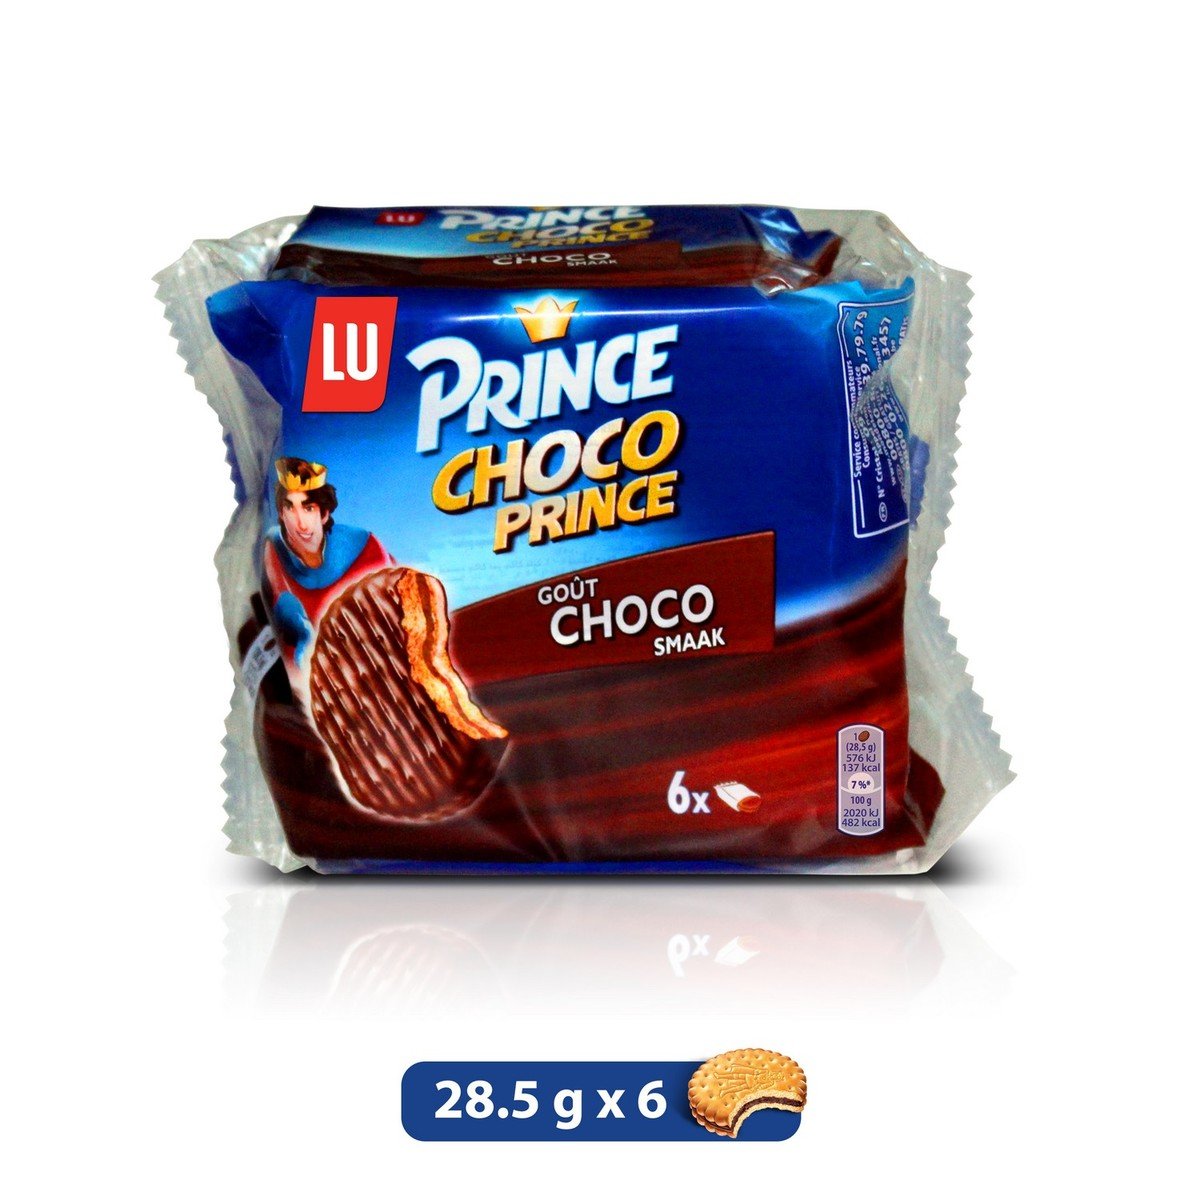 Lu Prince Choco Prince Biscuits 6 x 28.5 g